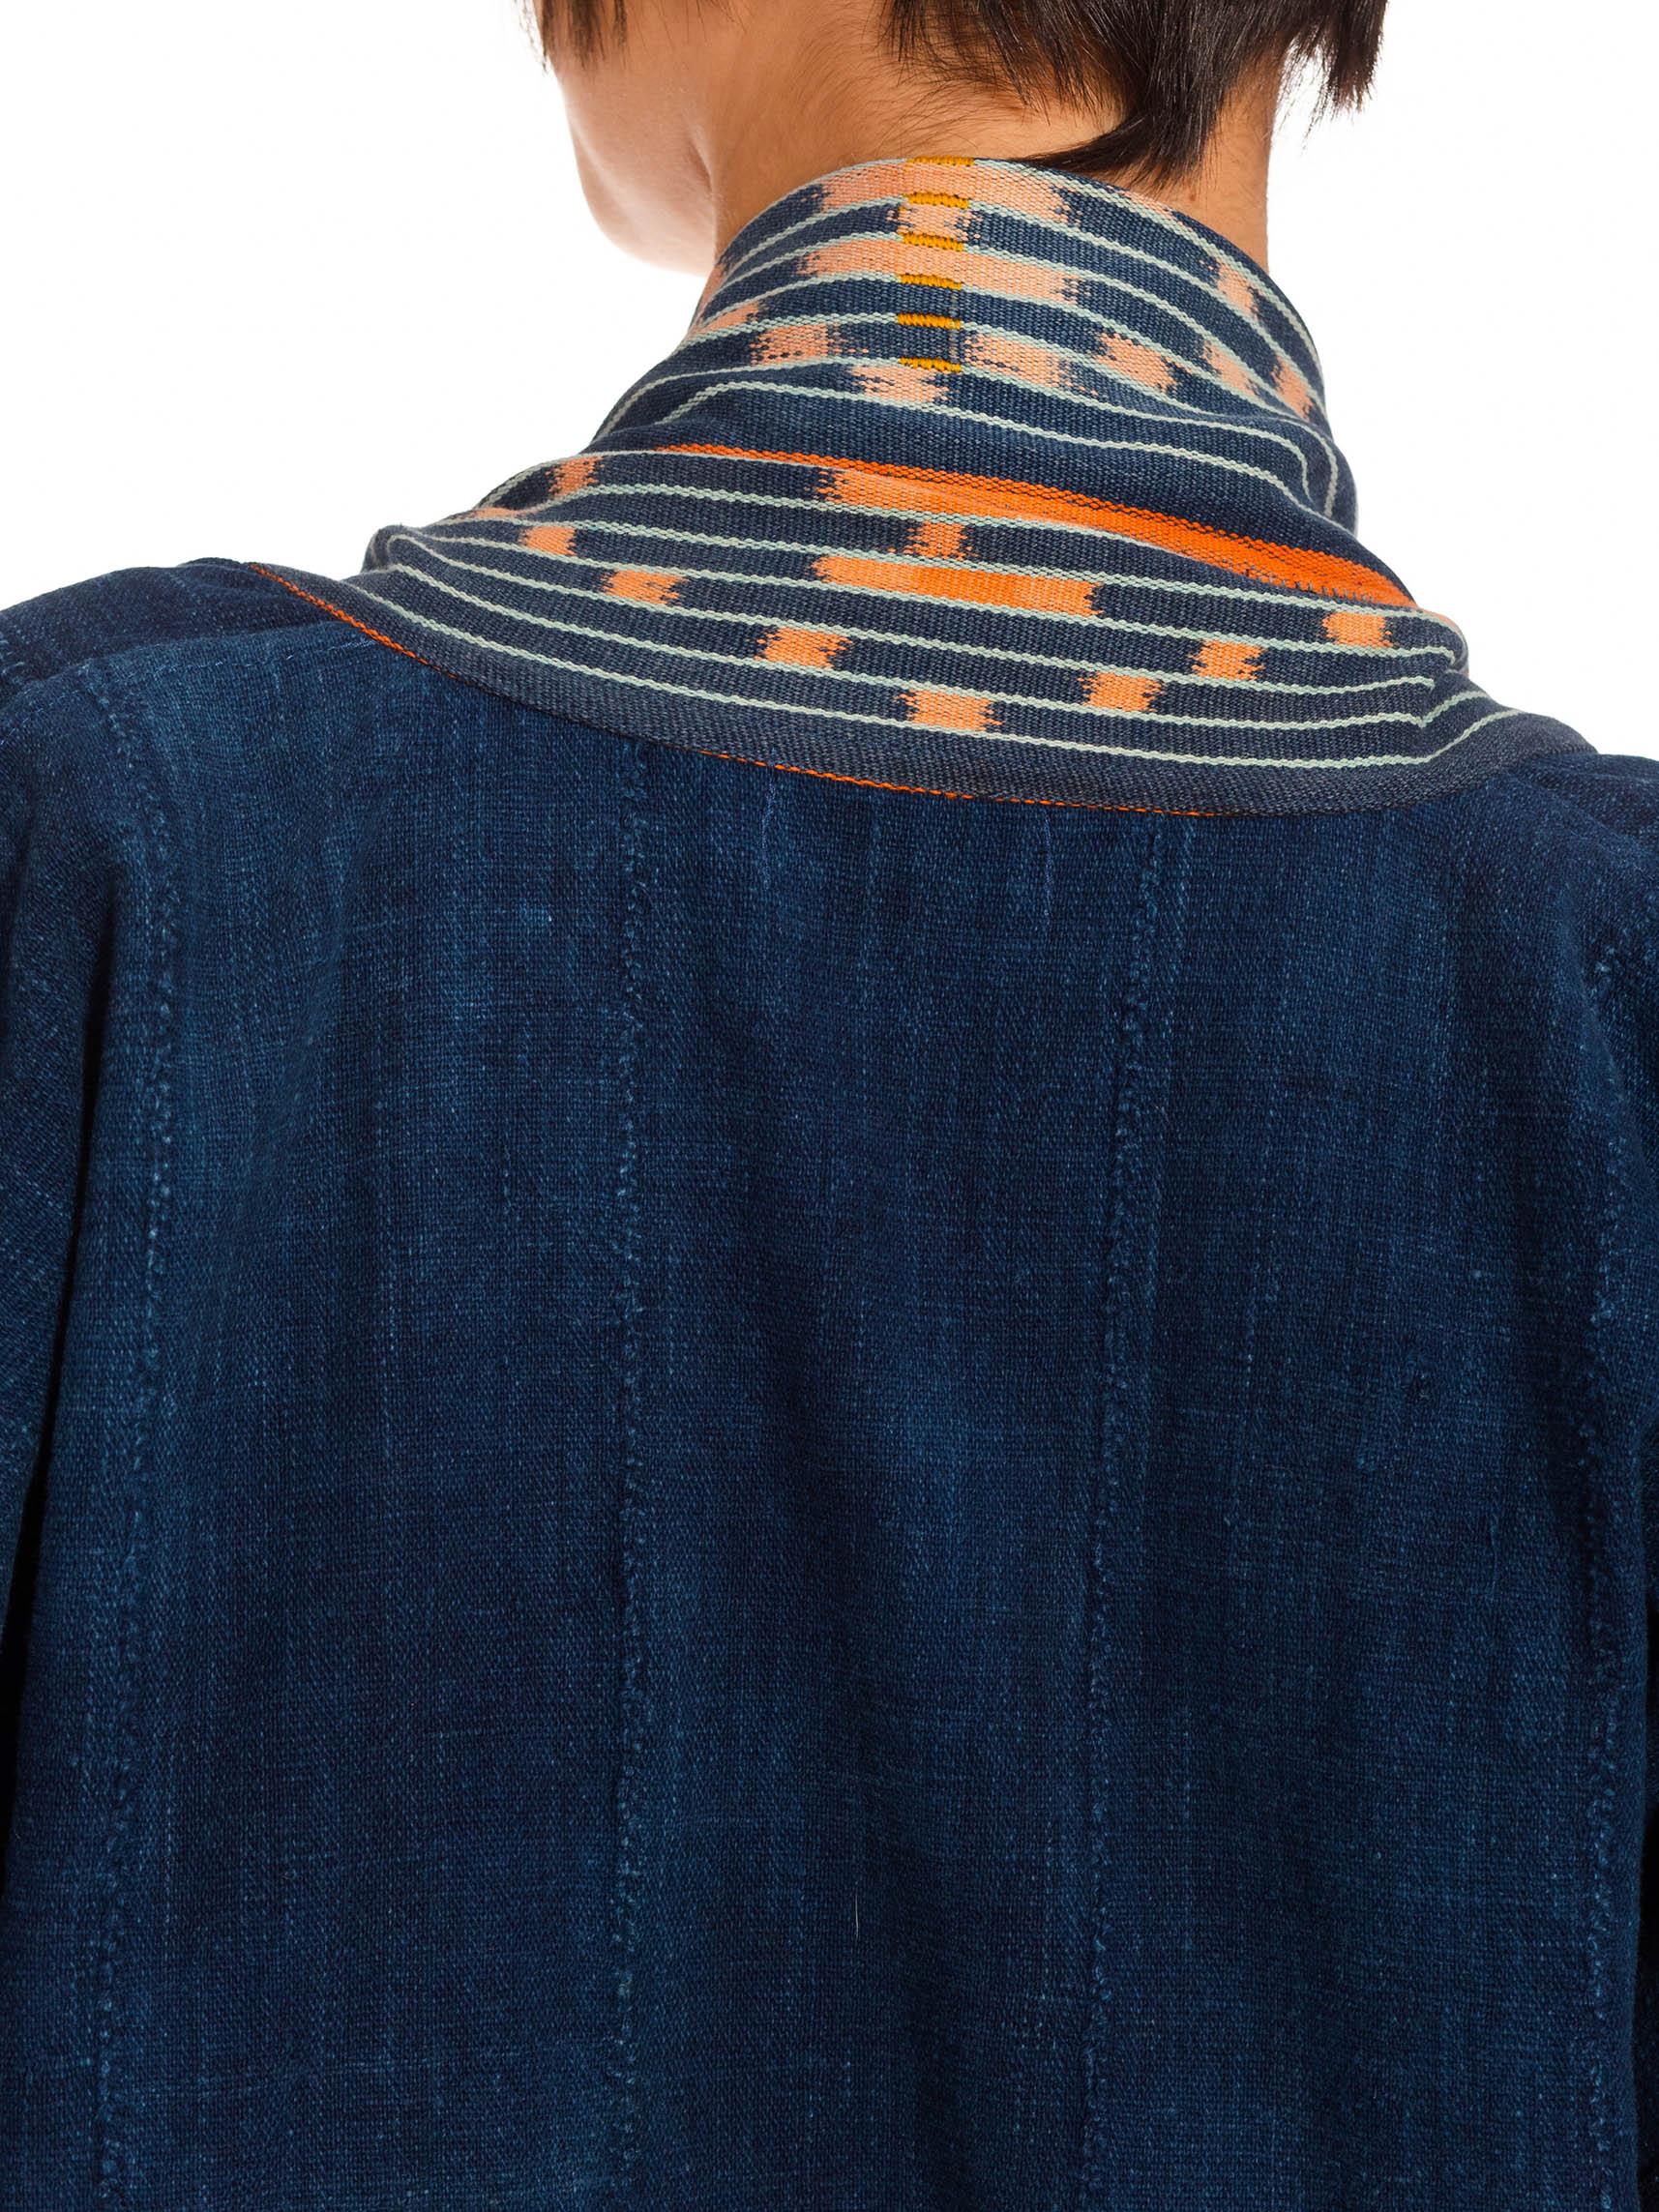 Morphew Collection - Tissu en coton bleu et orange vintage africain cyclisé, collection Indig en vente 4